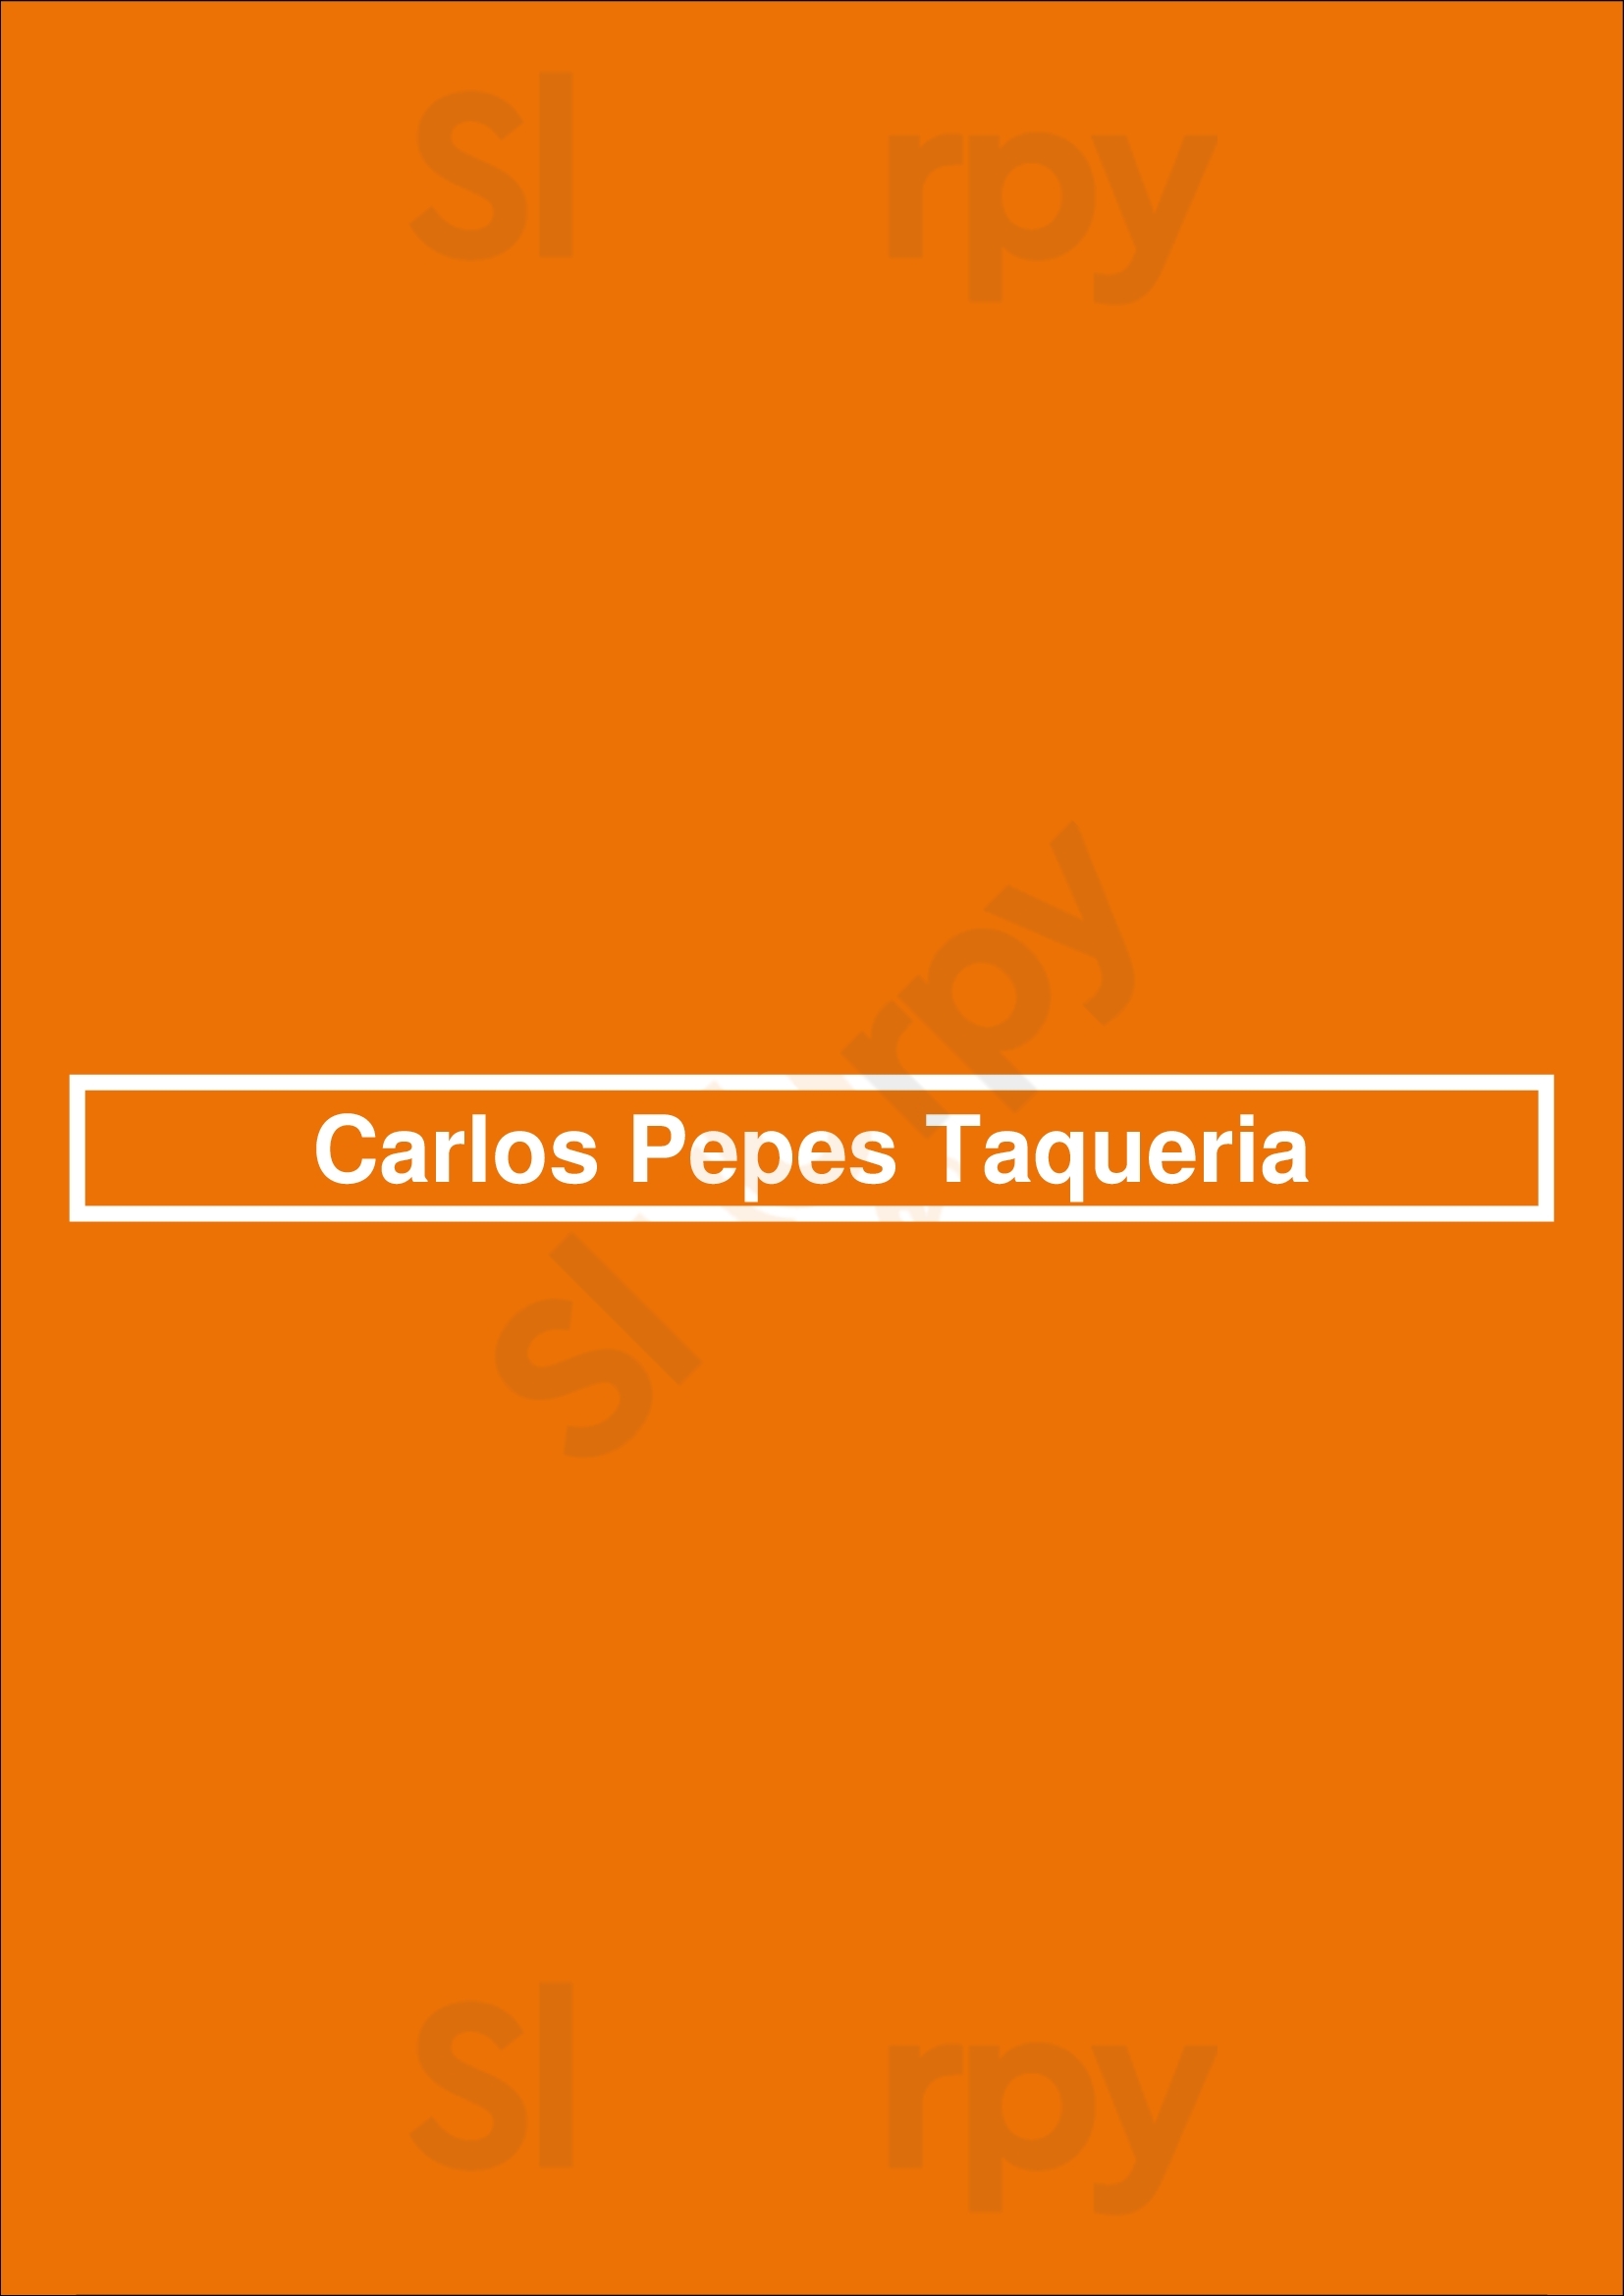 Carlos Pepes Taqueria Laval Menu - 1